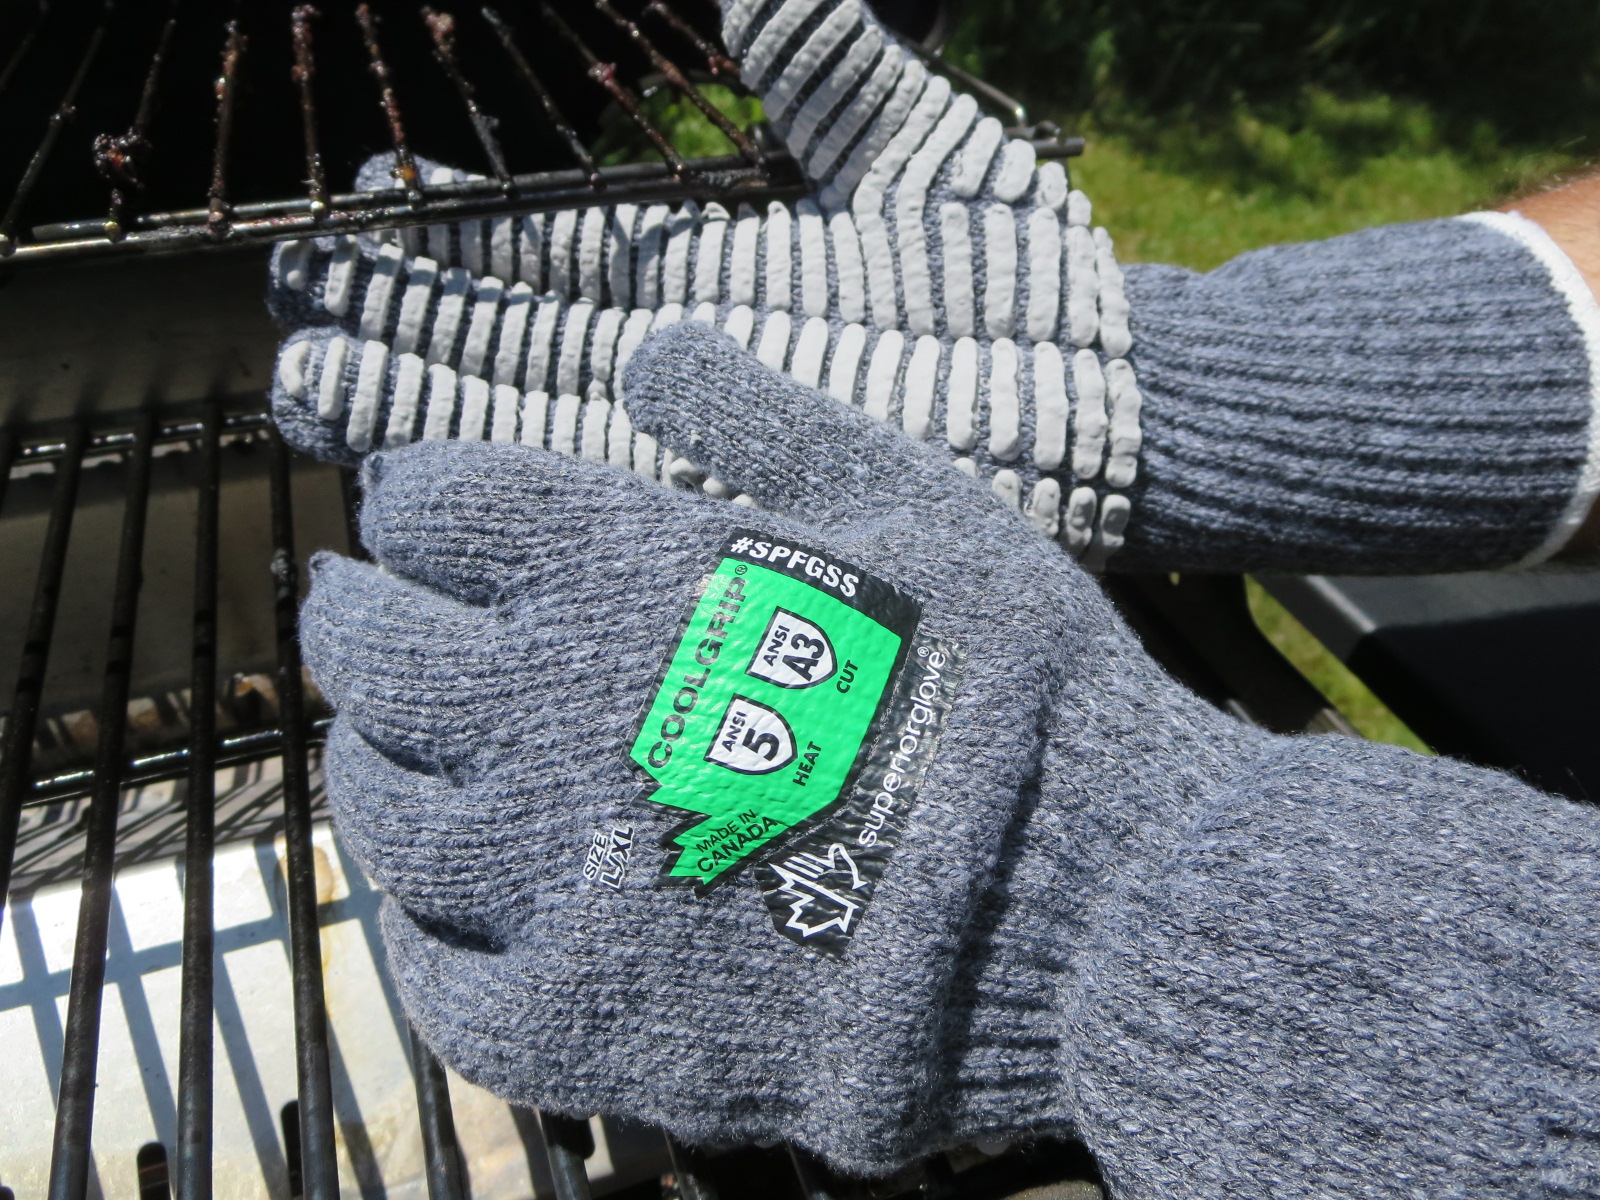 Custom Superior Grip Work Gloves from Promotional Gloves